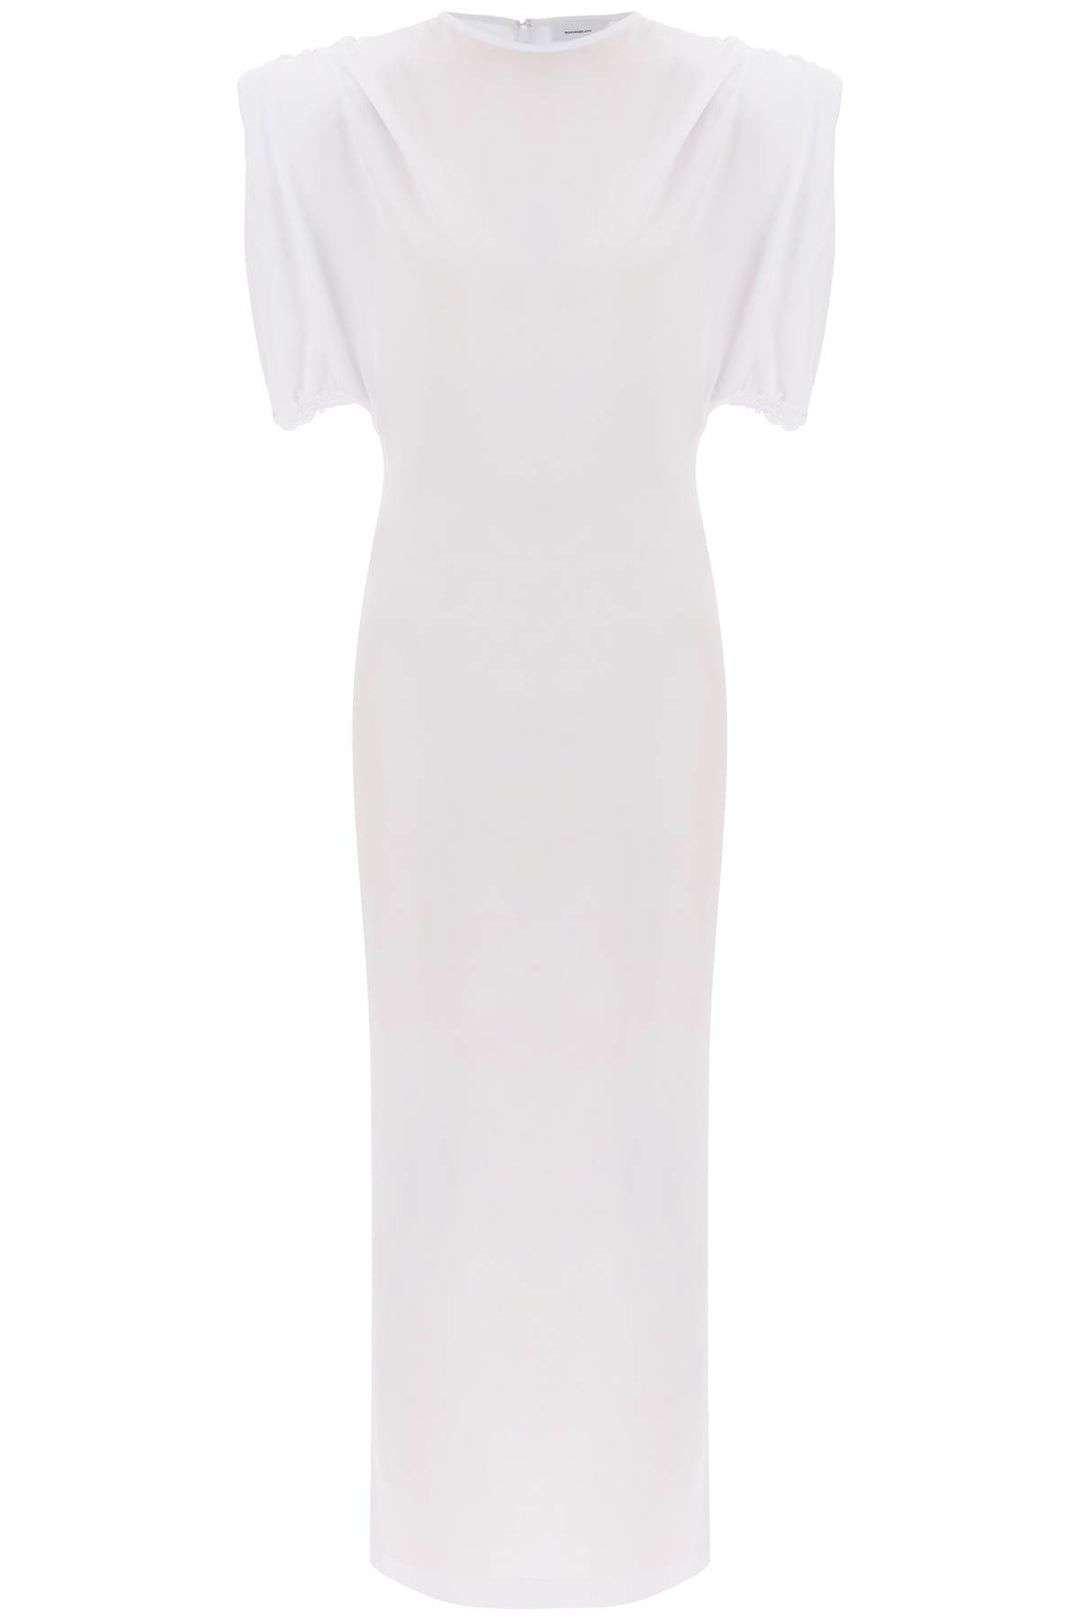 Wardrobe.nyc midi sheath dress with structured shoulders-0